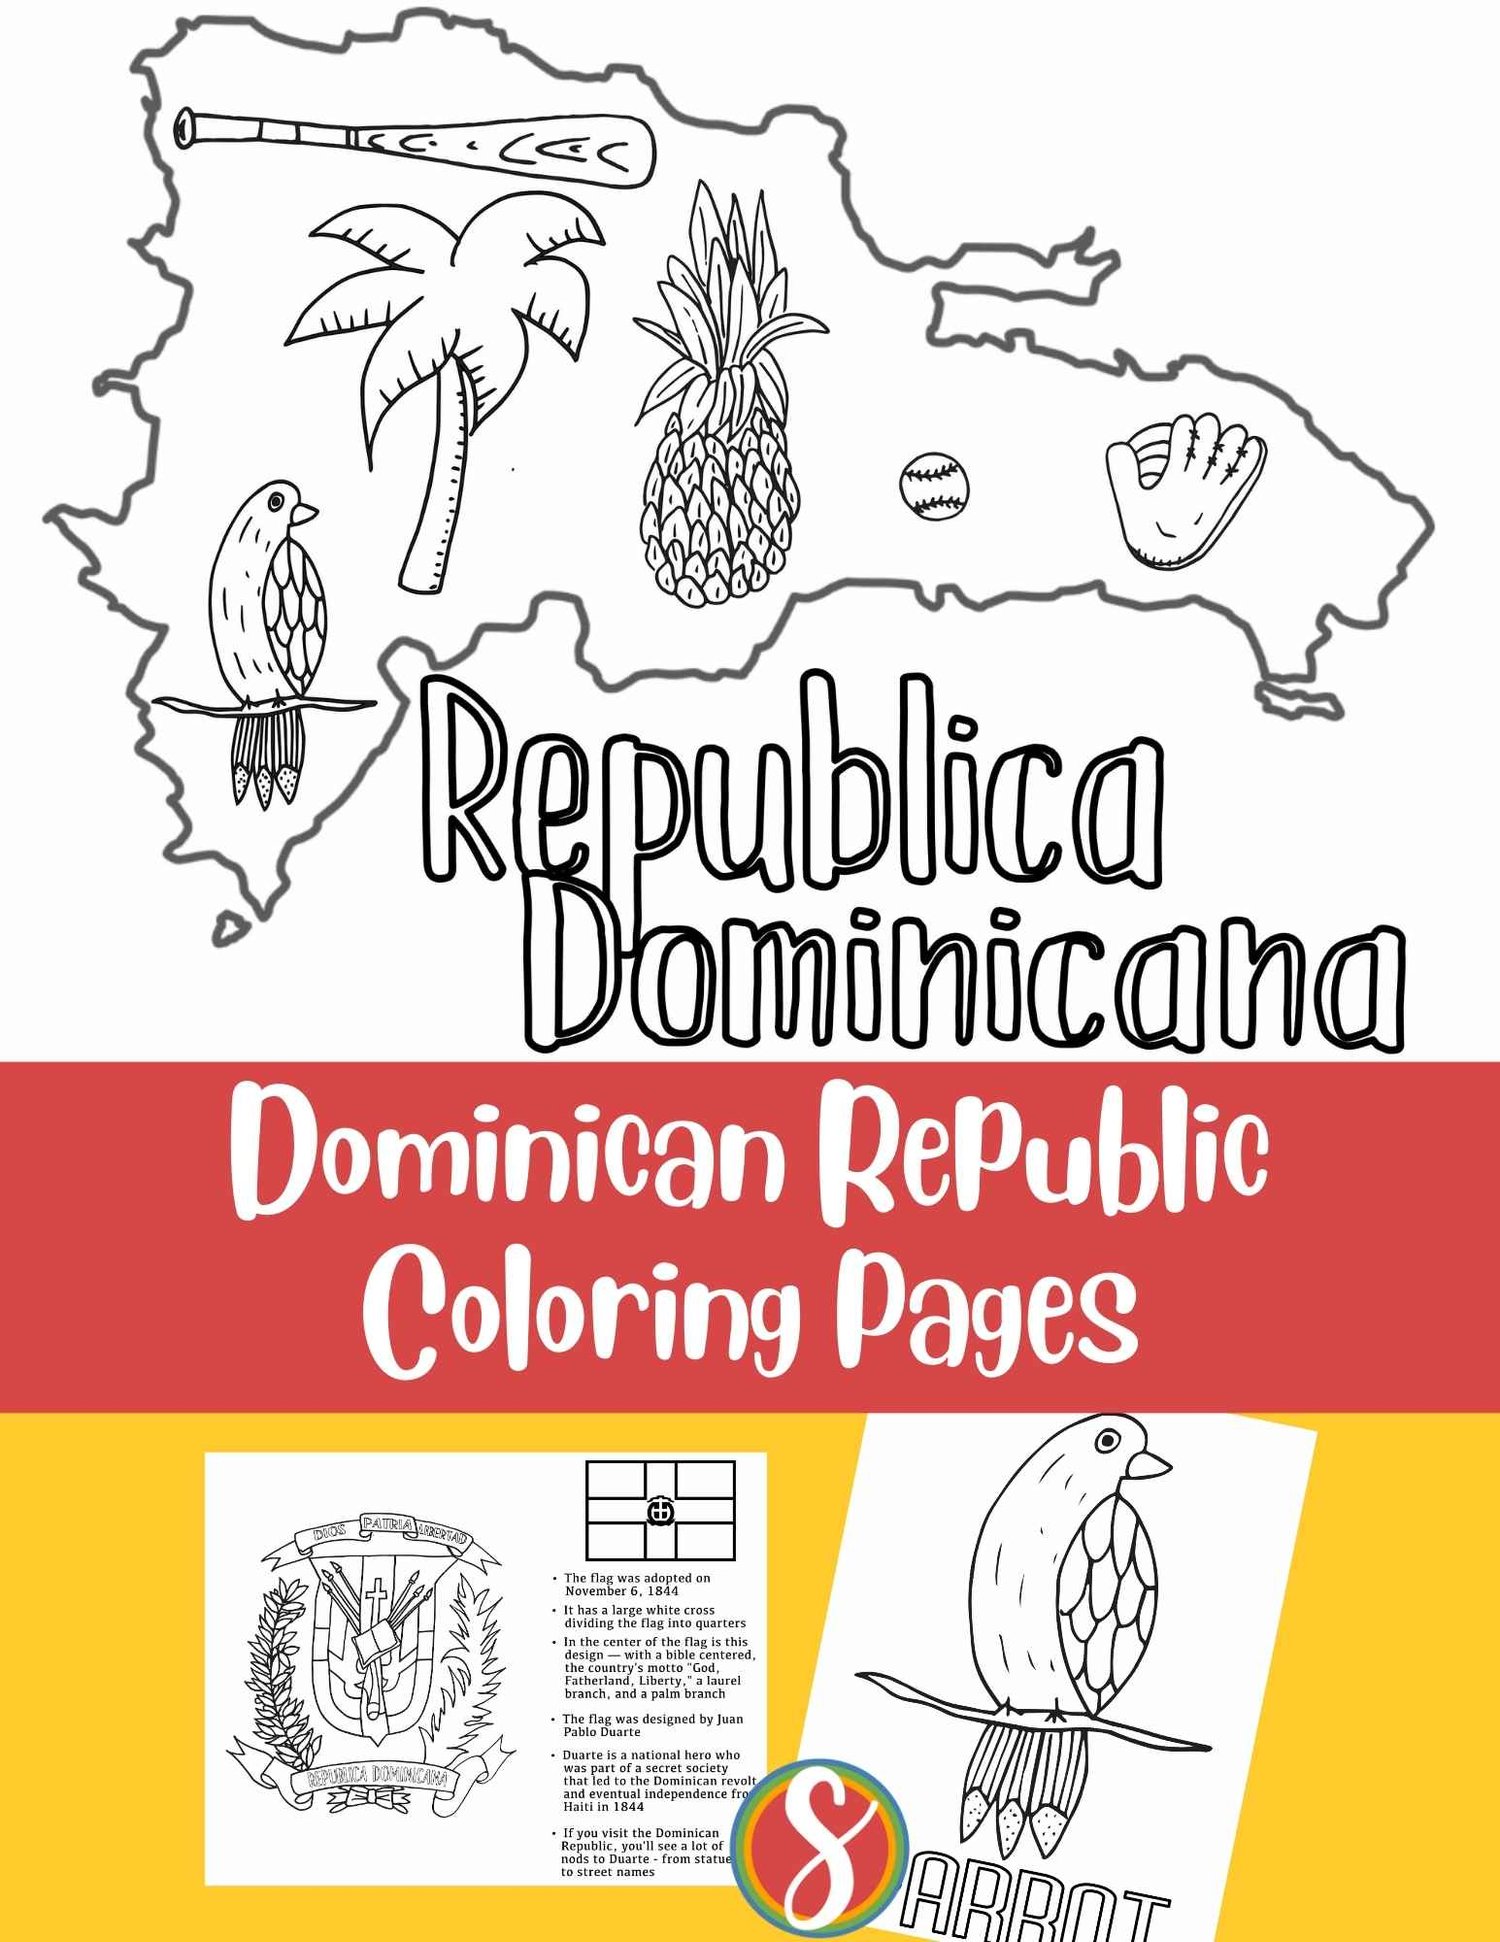 Free dominican republic coloring pages â stevie doodles